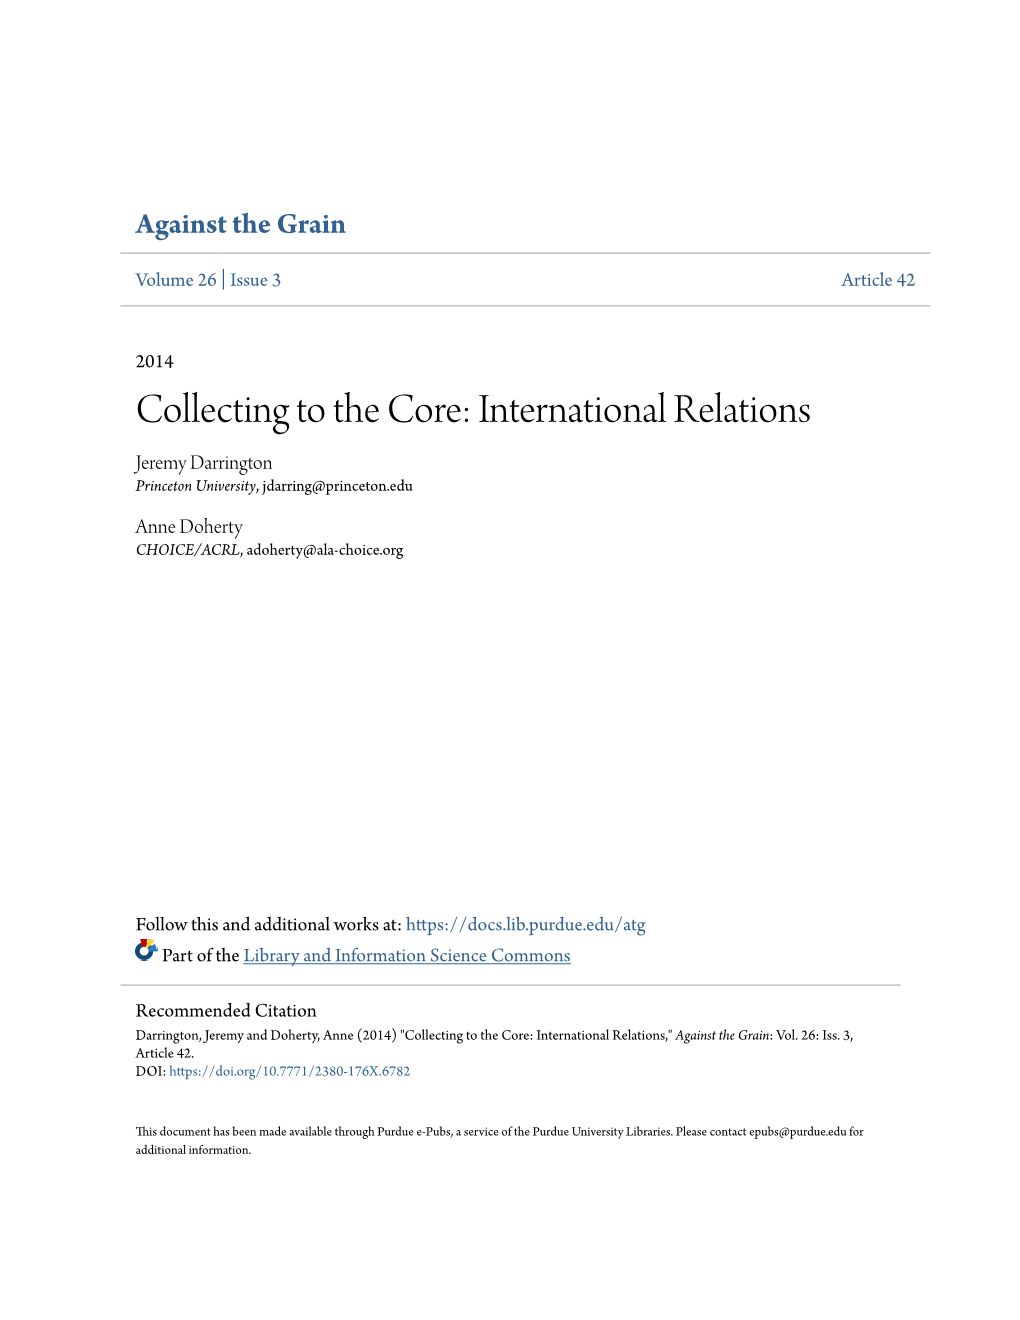 International Relations Jeremy Darrington Princeton University, Jdarring@Princeton.Edu